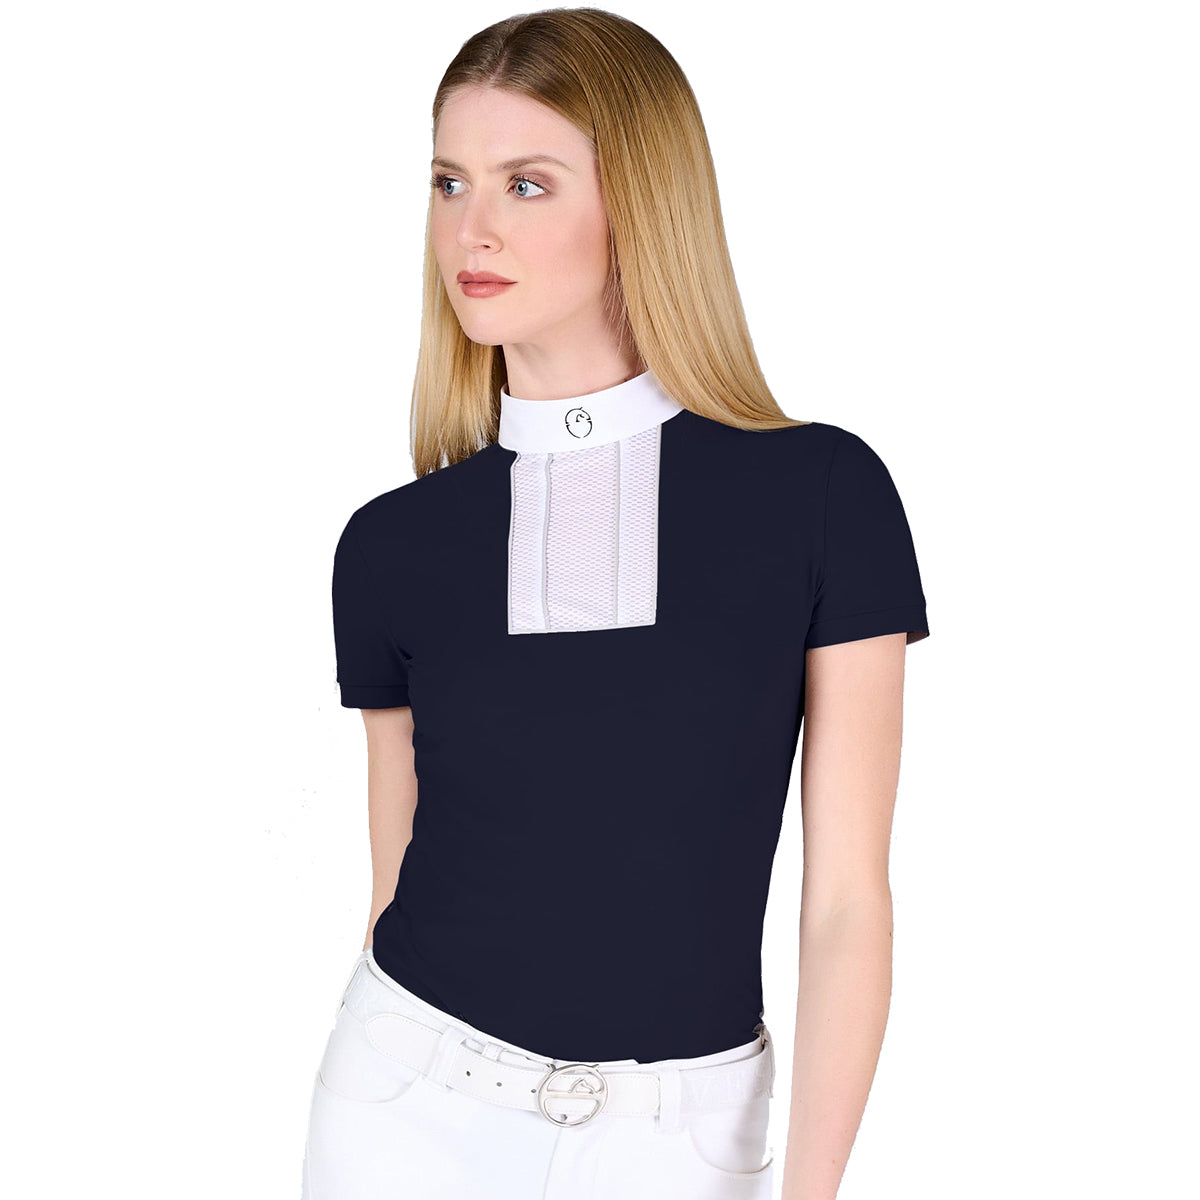 Vestrum Women's Brasilia Short Sleeve Show Shirt - Sale